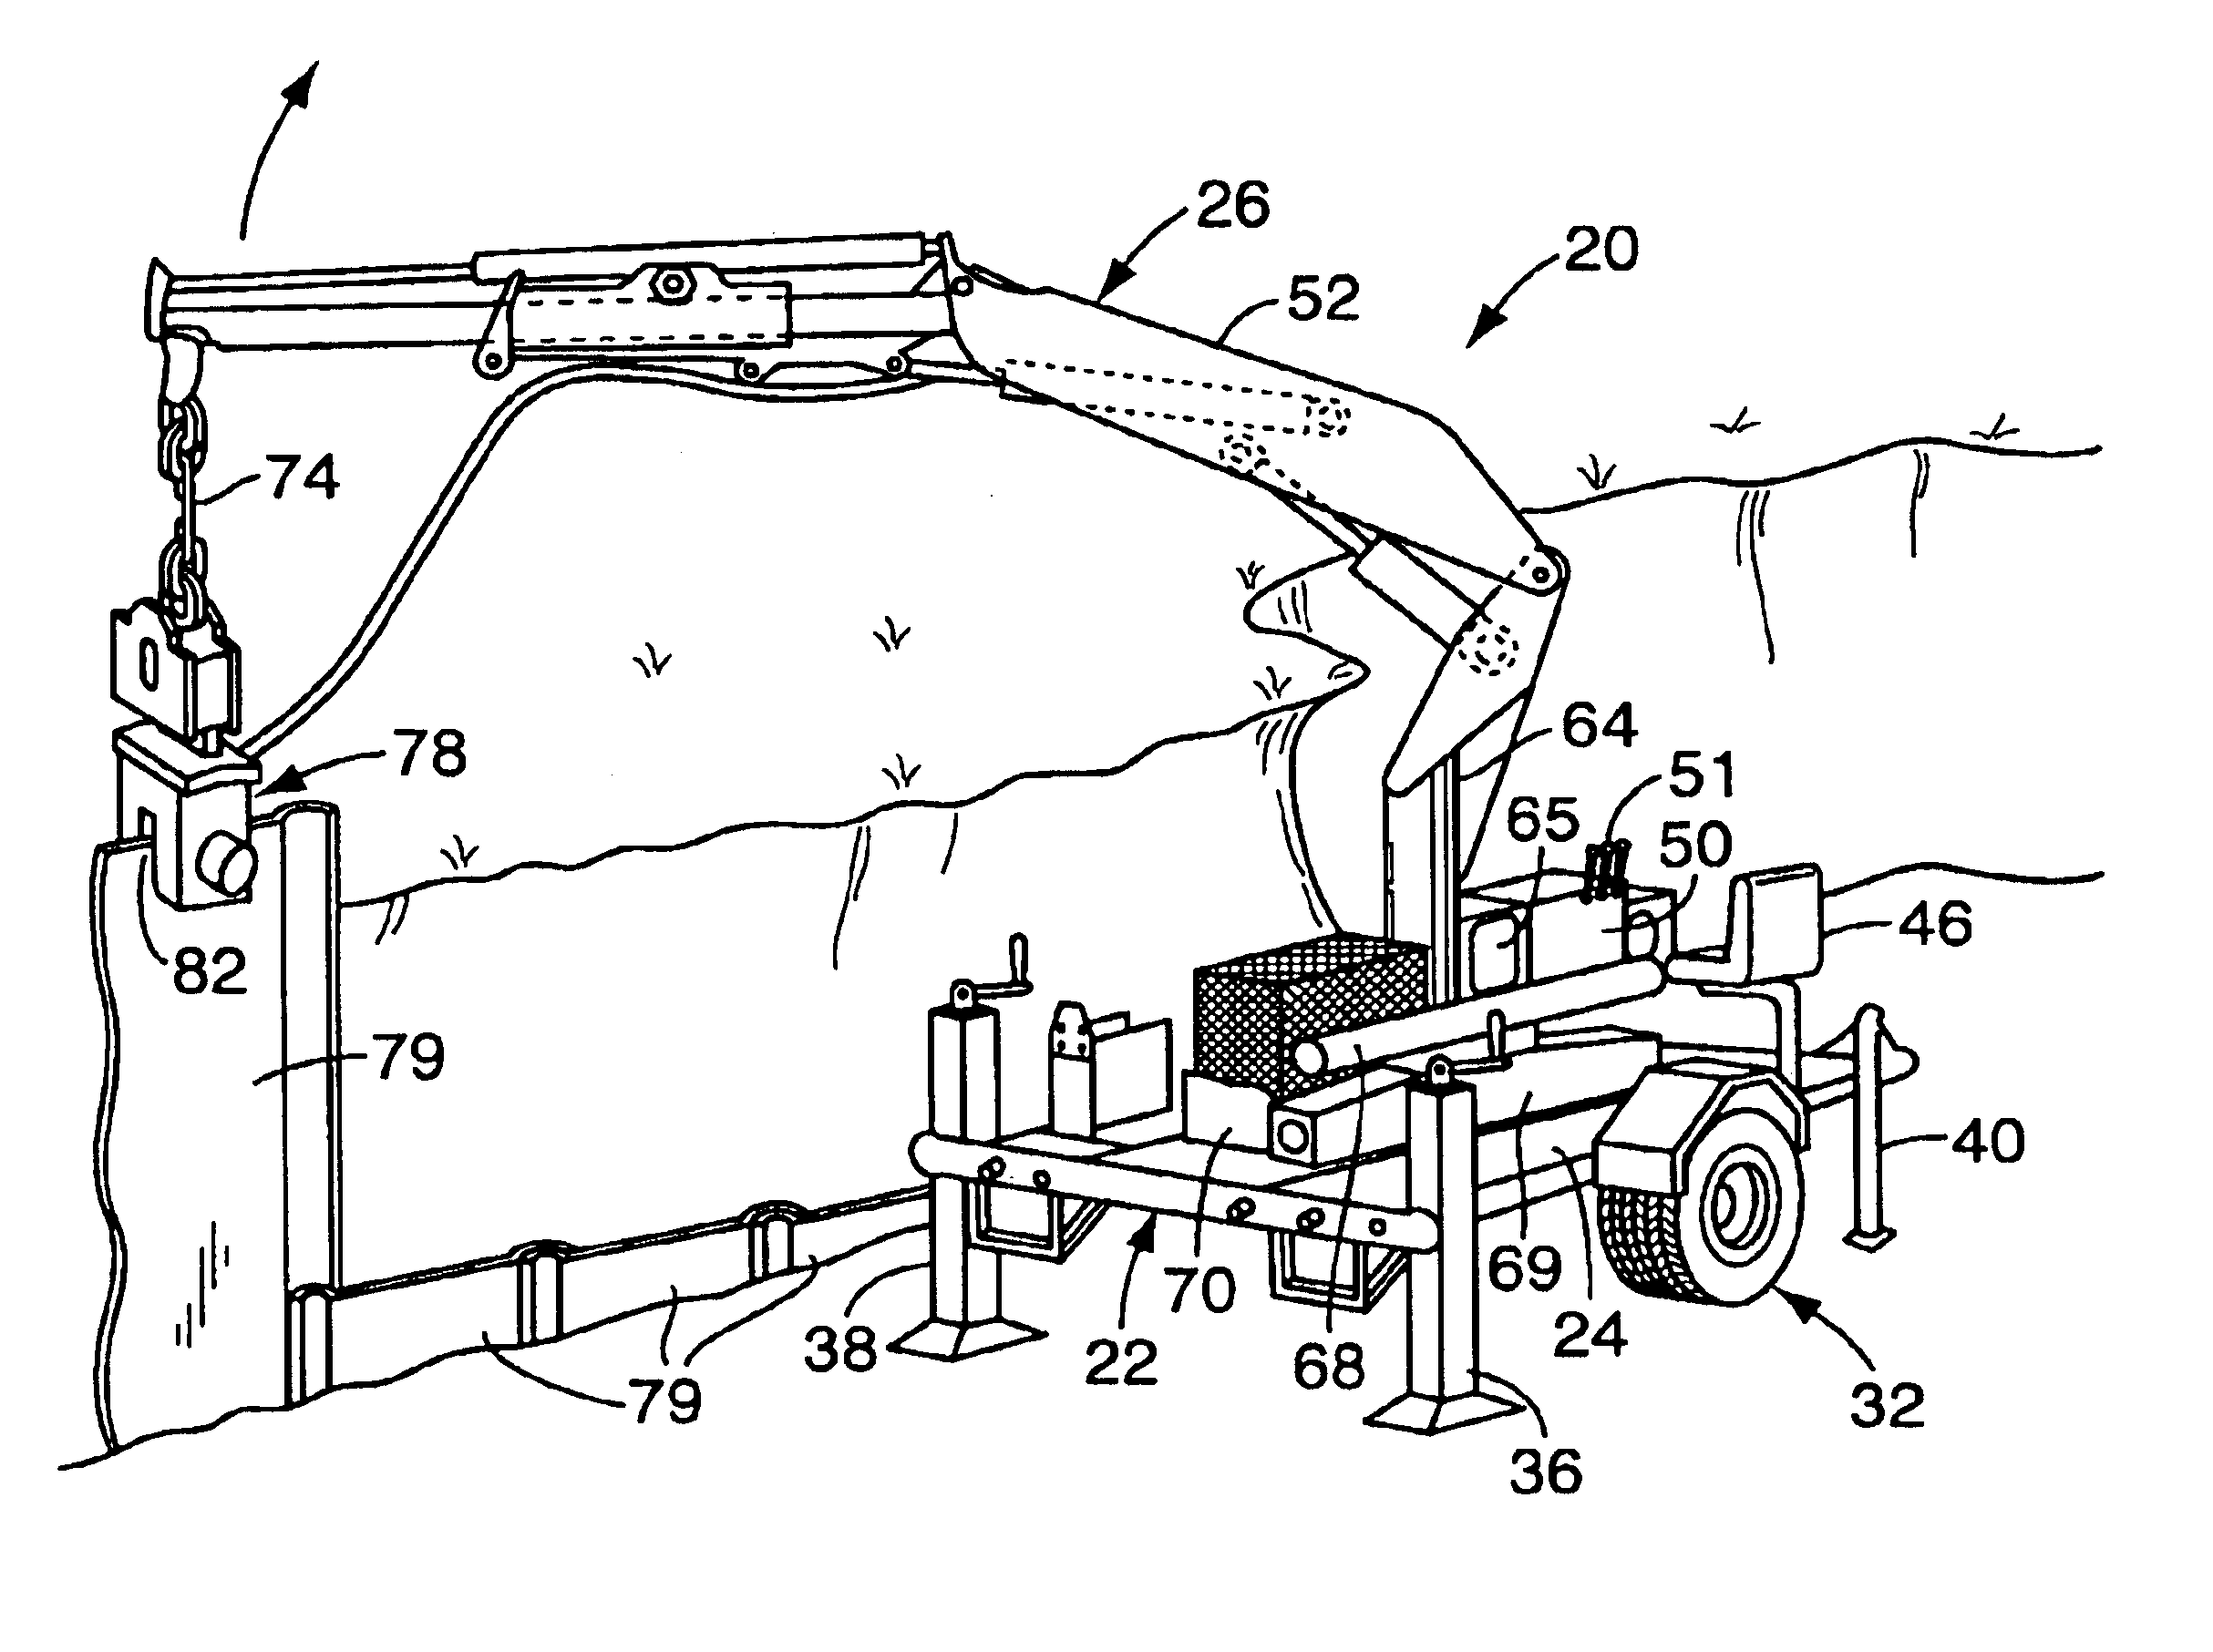 Trailer-mounted crane apparatus